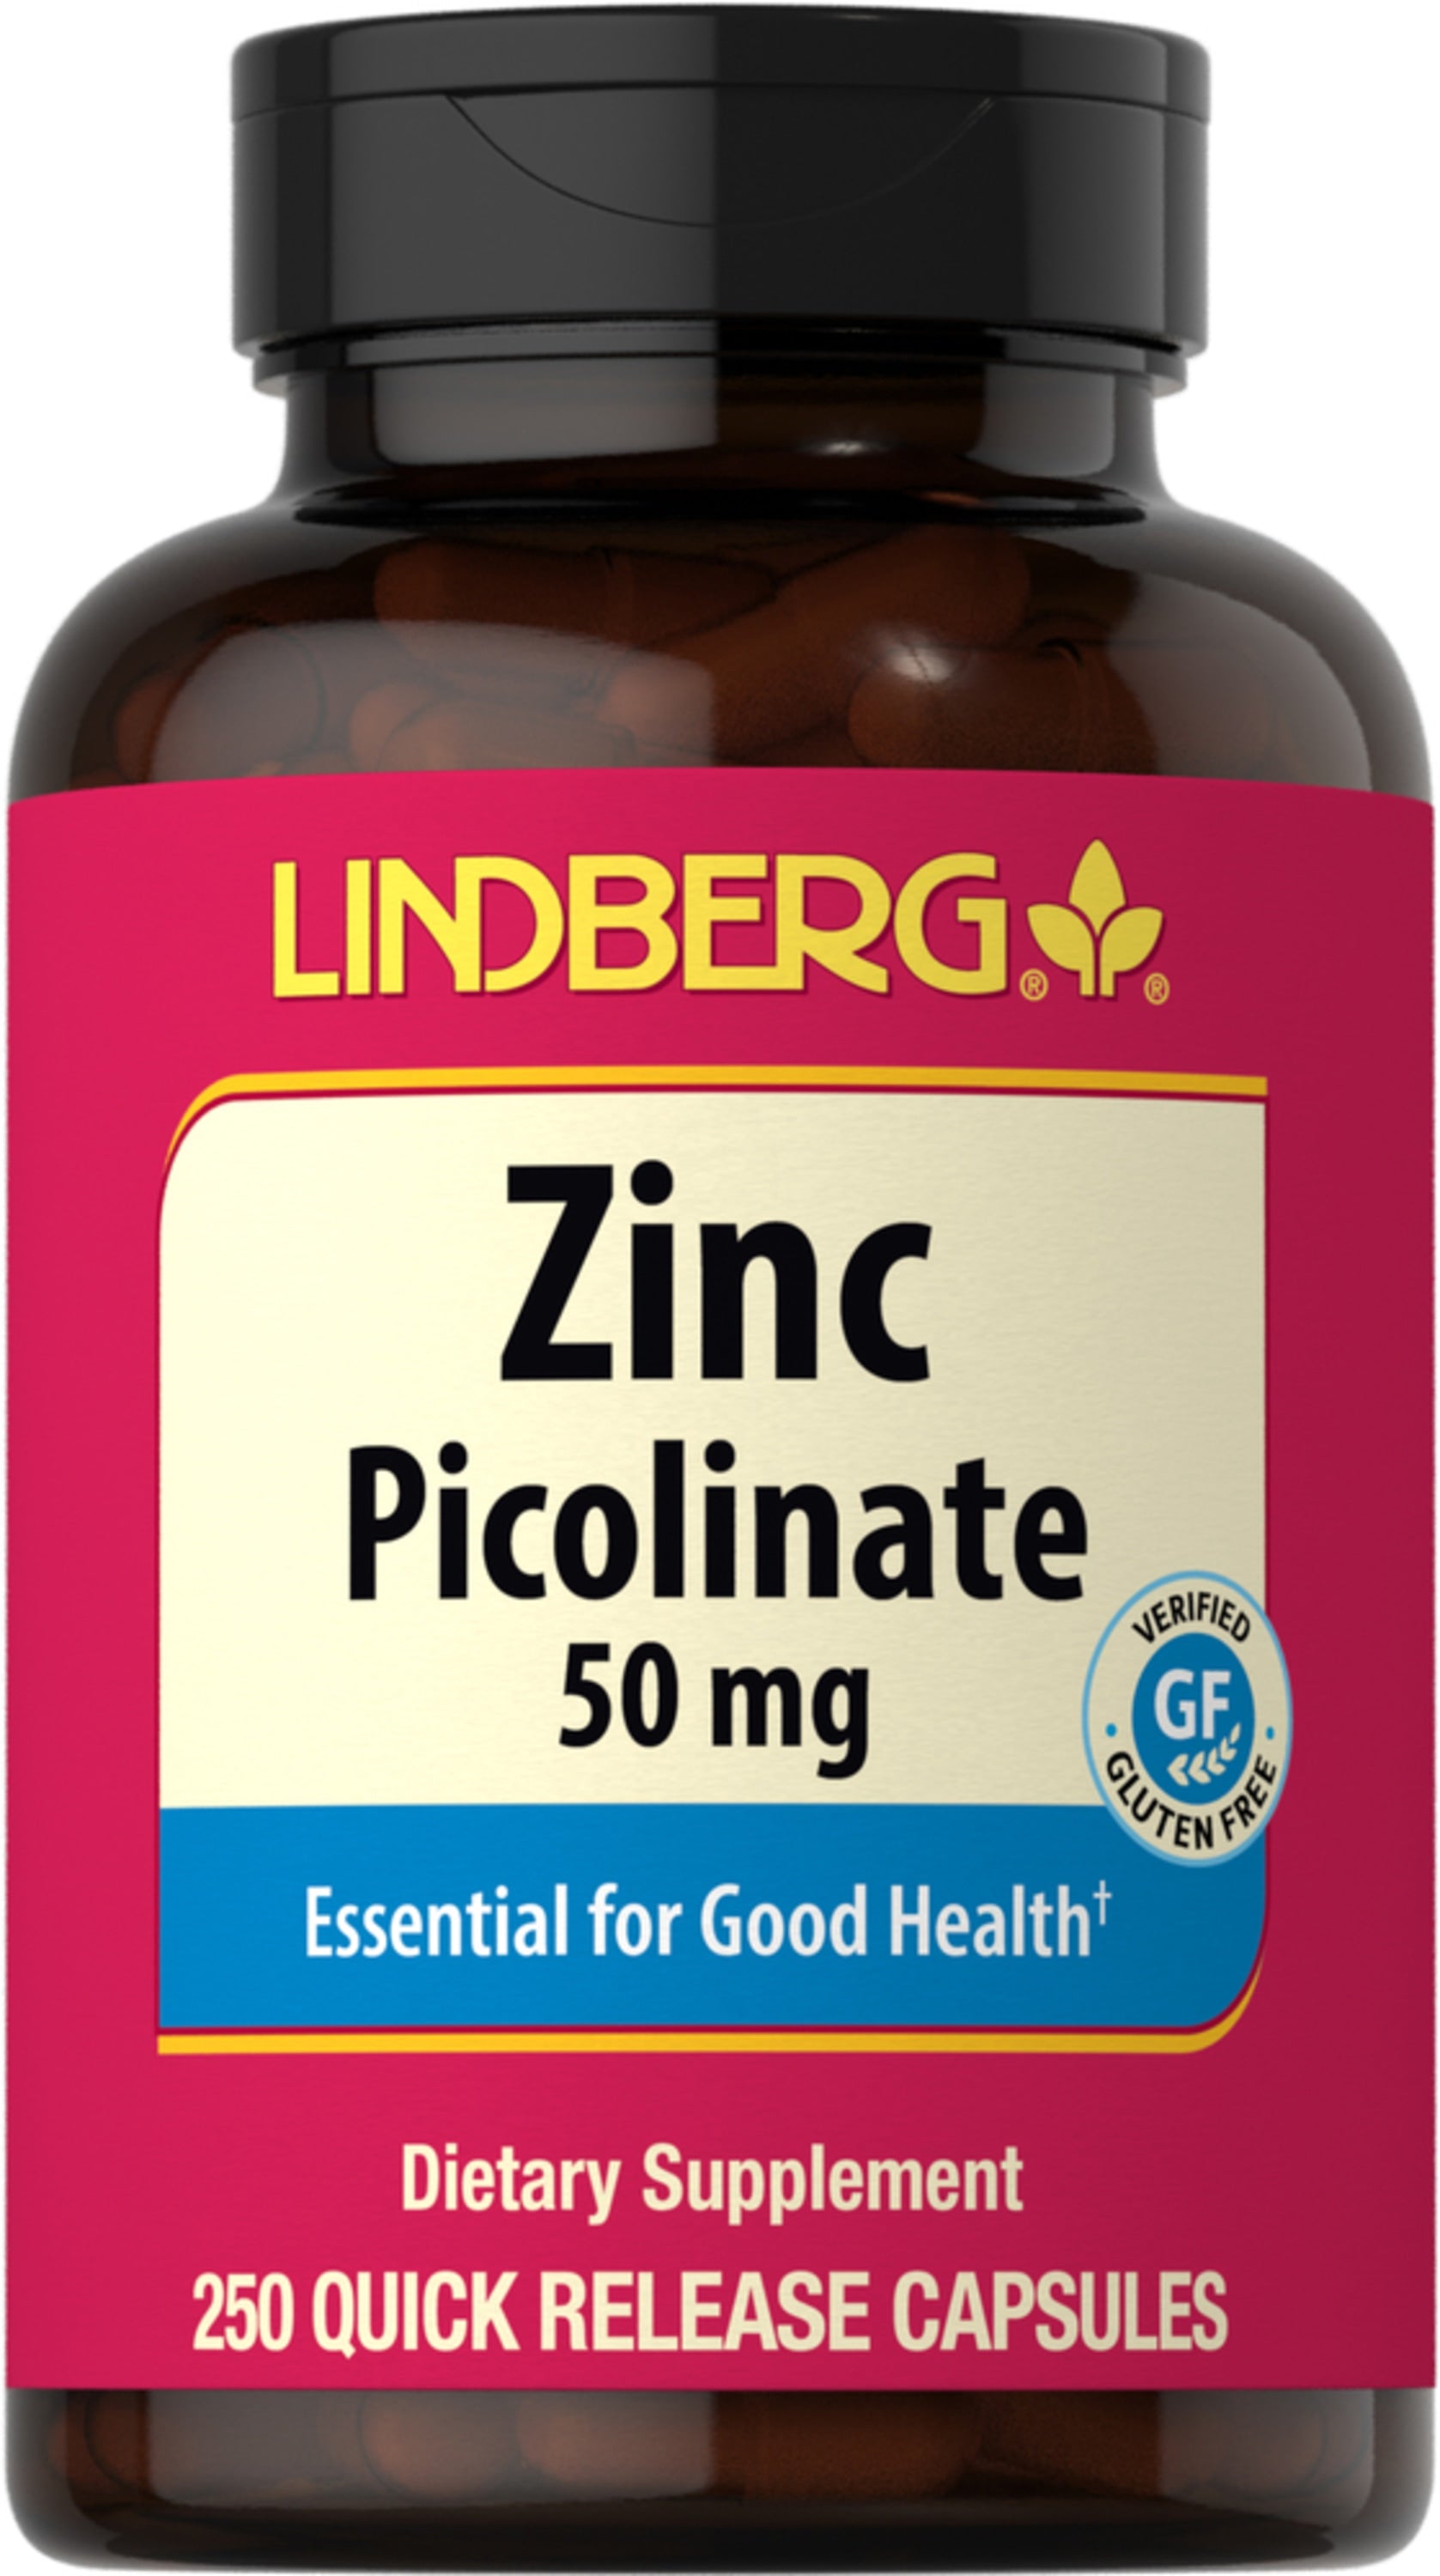 Zinc Picolinate, 50 mg, 250 Quick Release Capsules